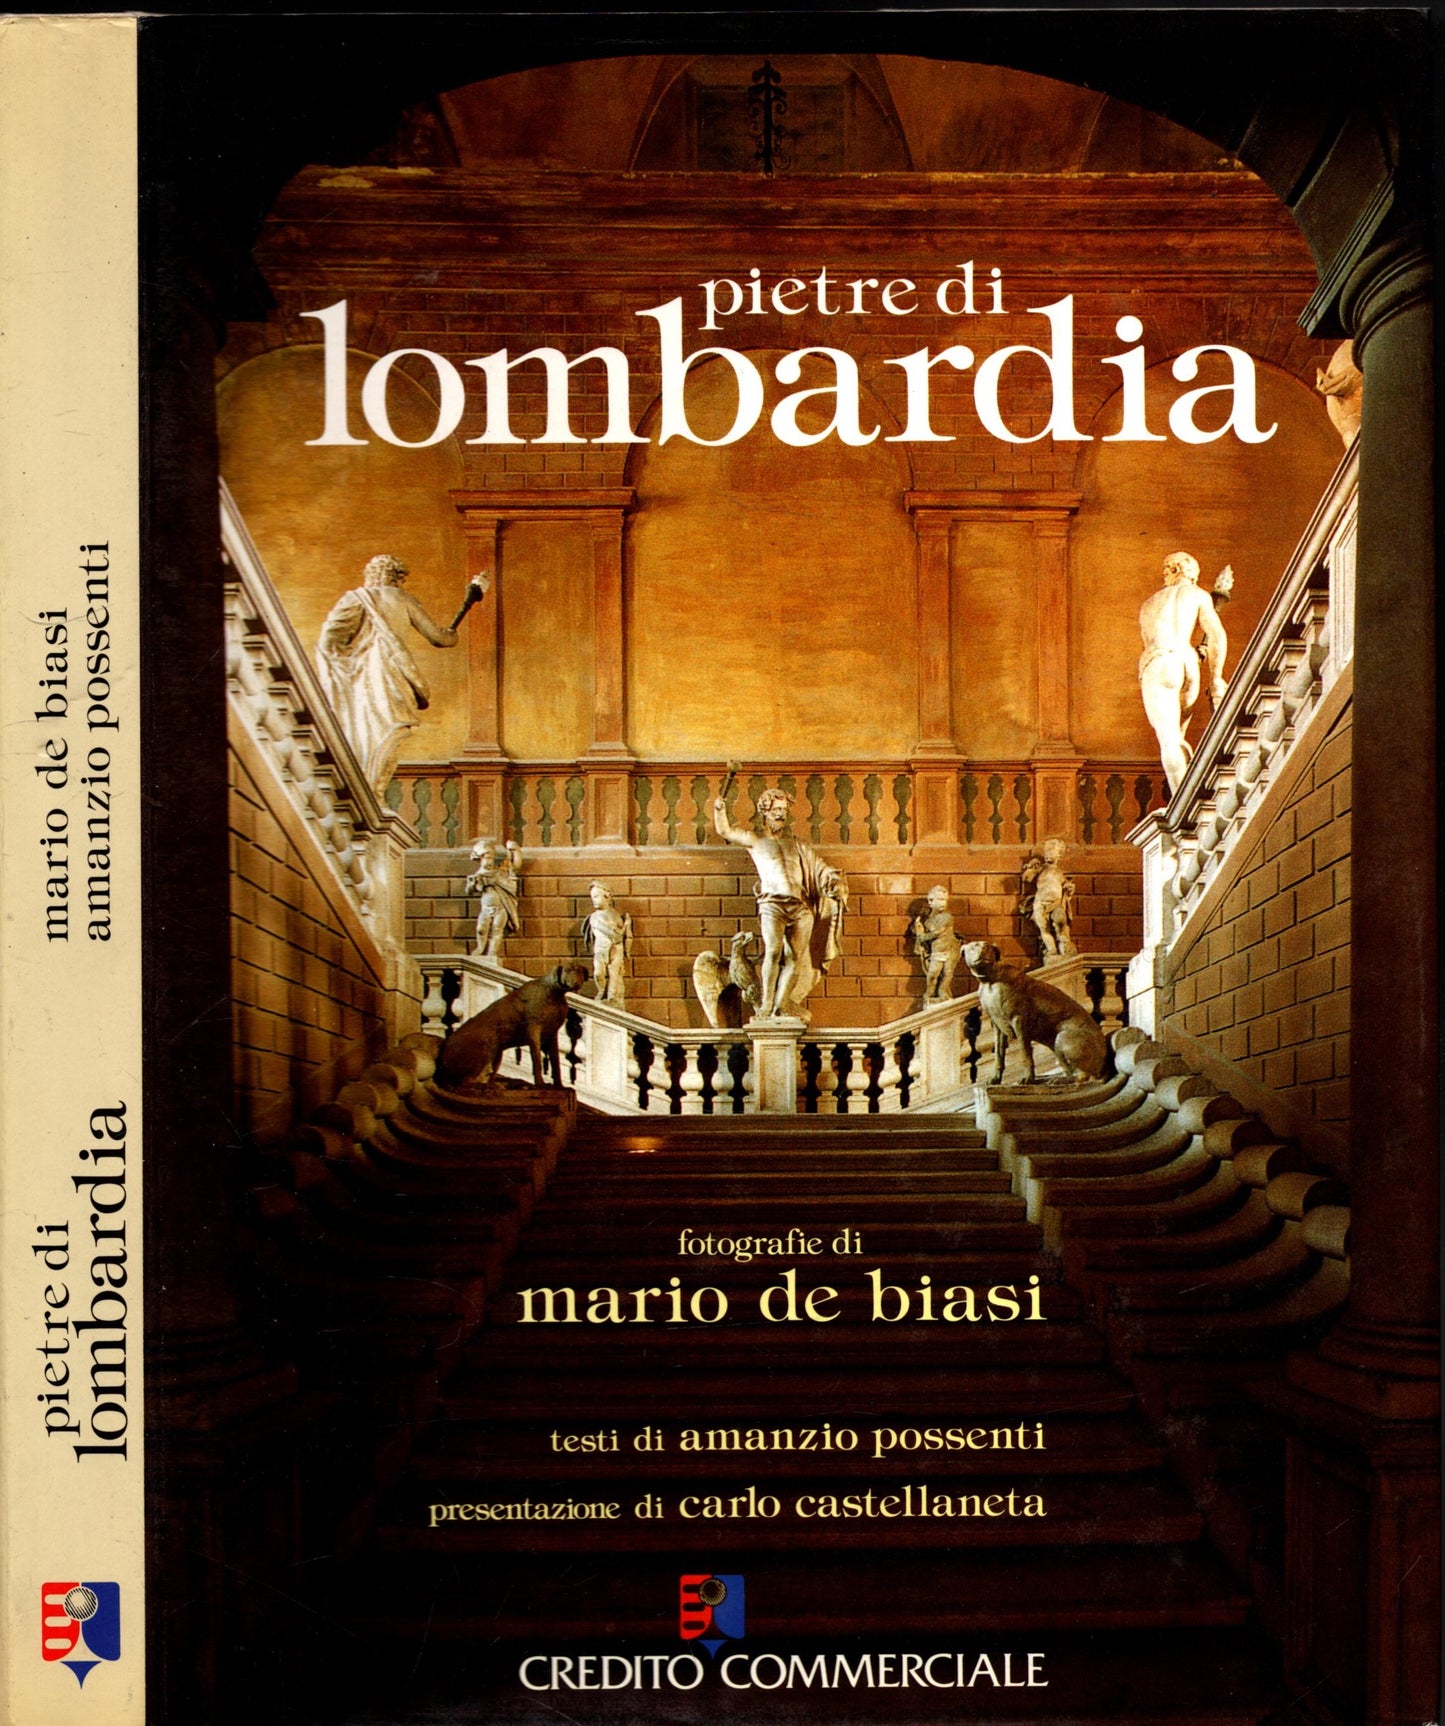 Pietre di Lombardia - Stones of lombardy